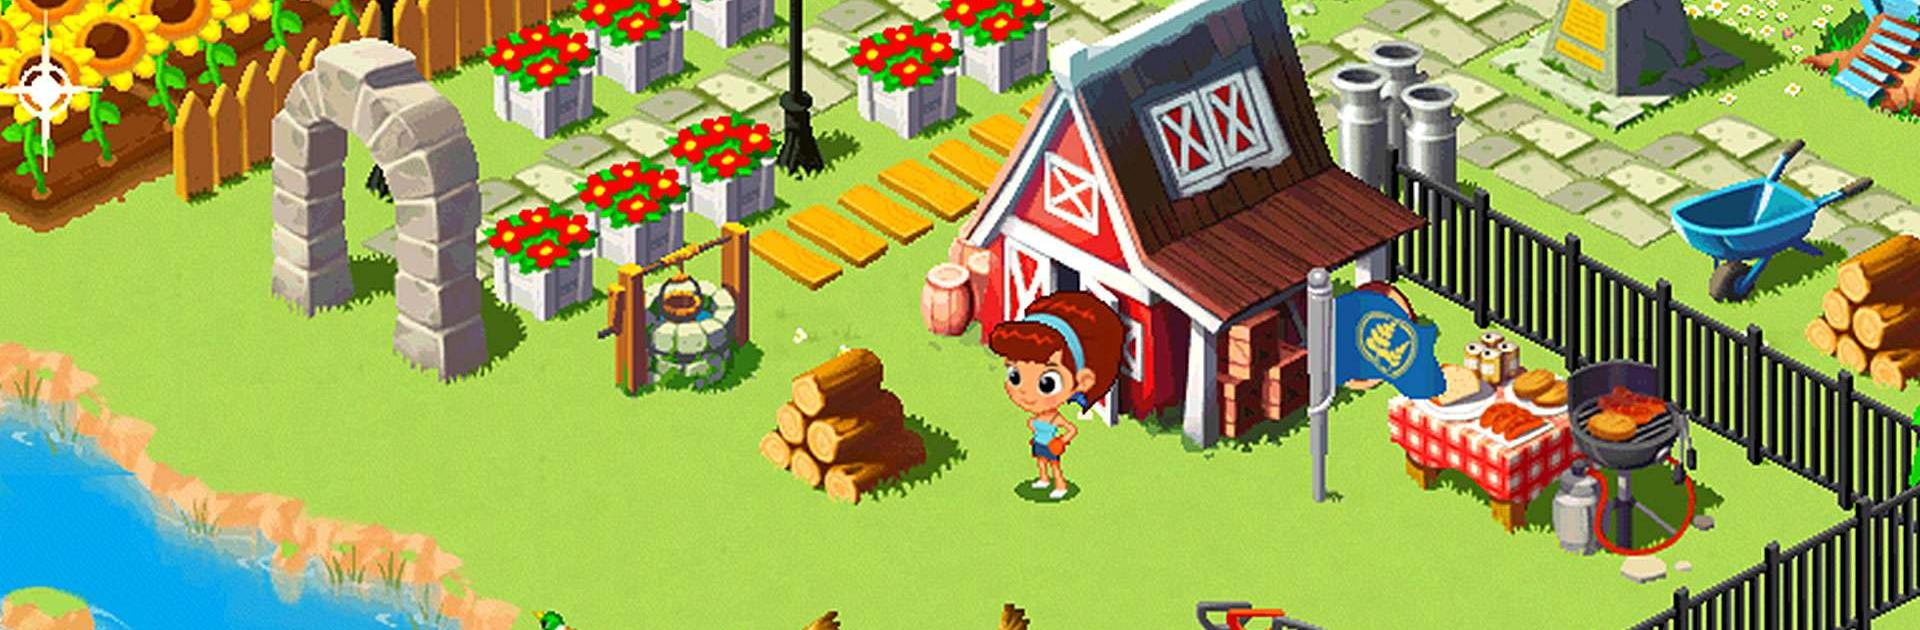 Скачайте И Играйте В «Зеленая Ферма 3» На ПК Или Mac (Эмулятор)